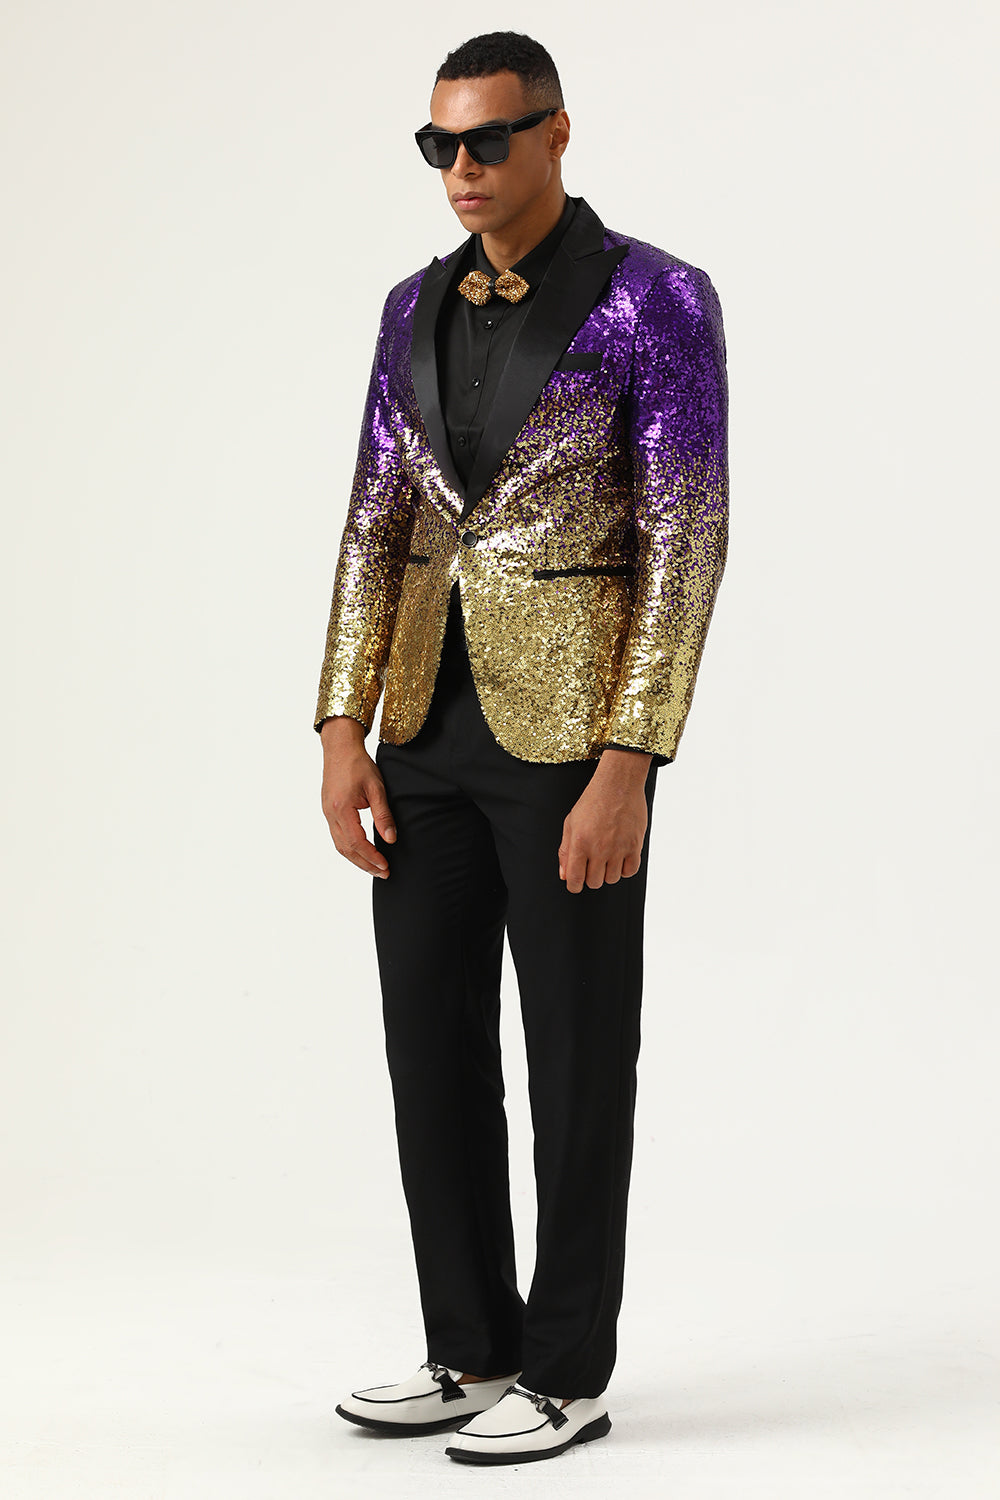 Sparkly Purple and Golden Sequins Men's Prom Blazer